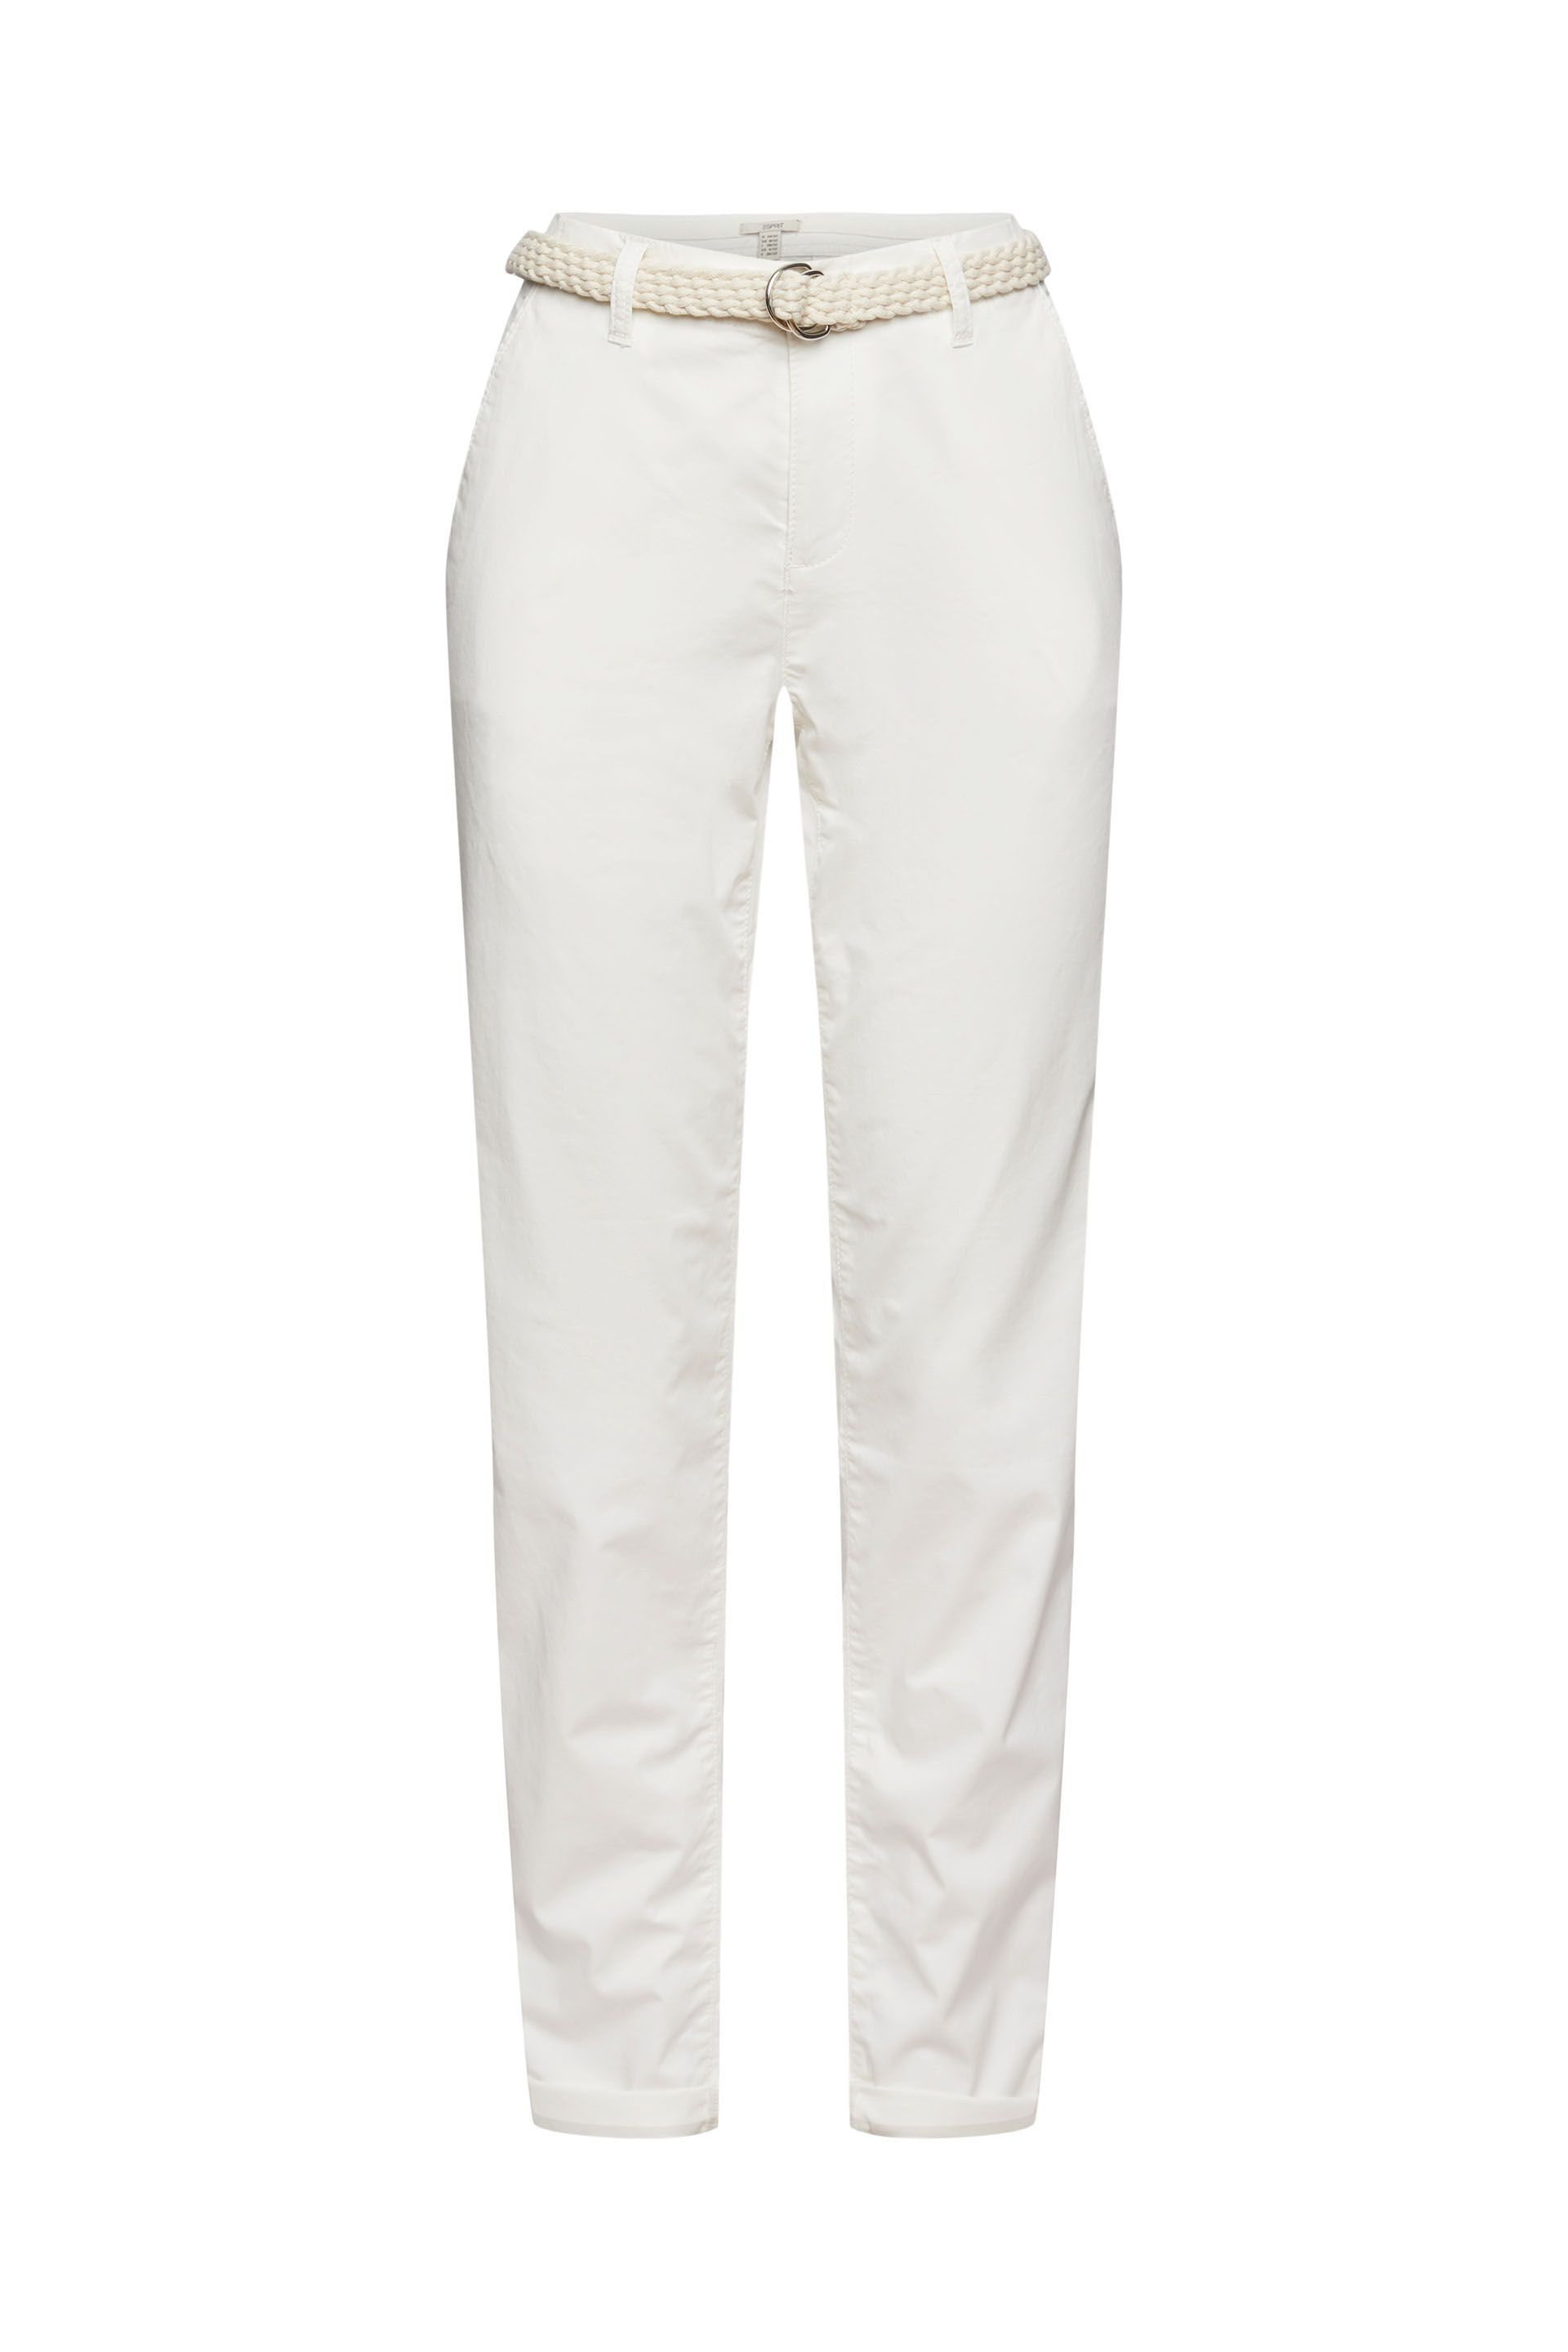 Pantaloni chino con cintura intrecciata, Bianco, large image number 0